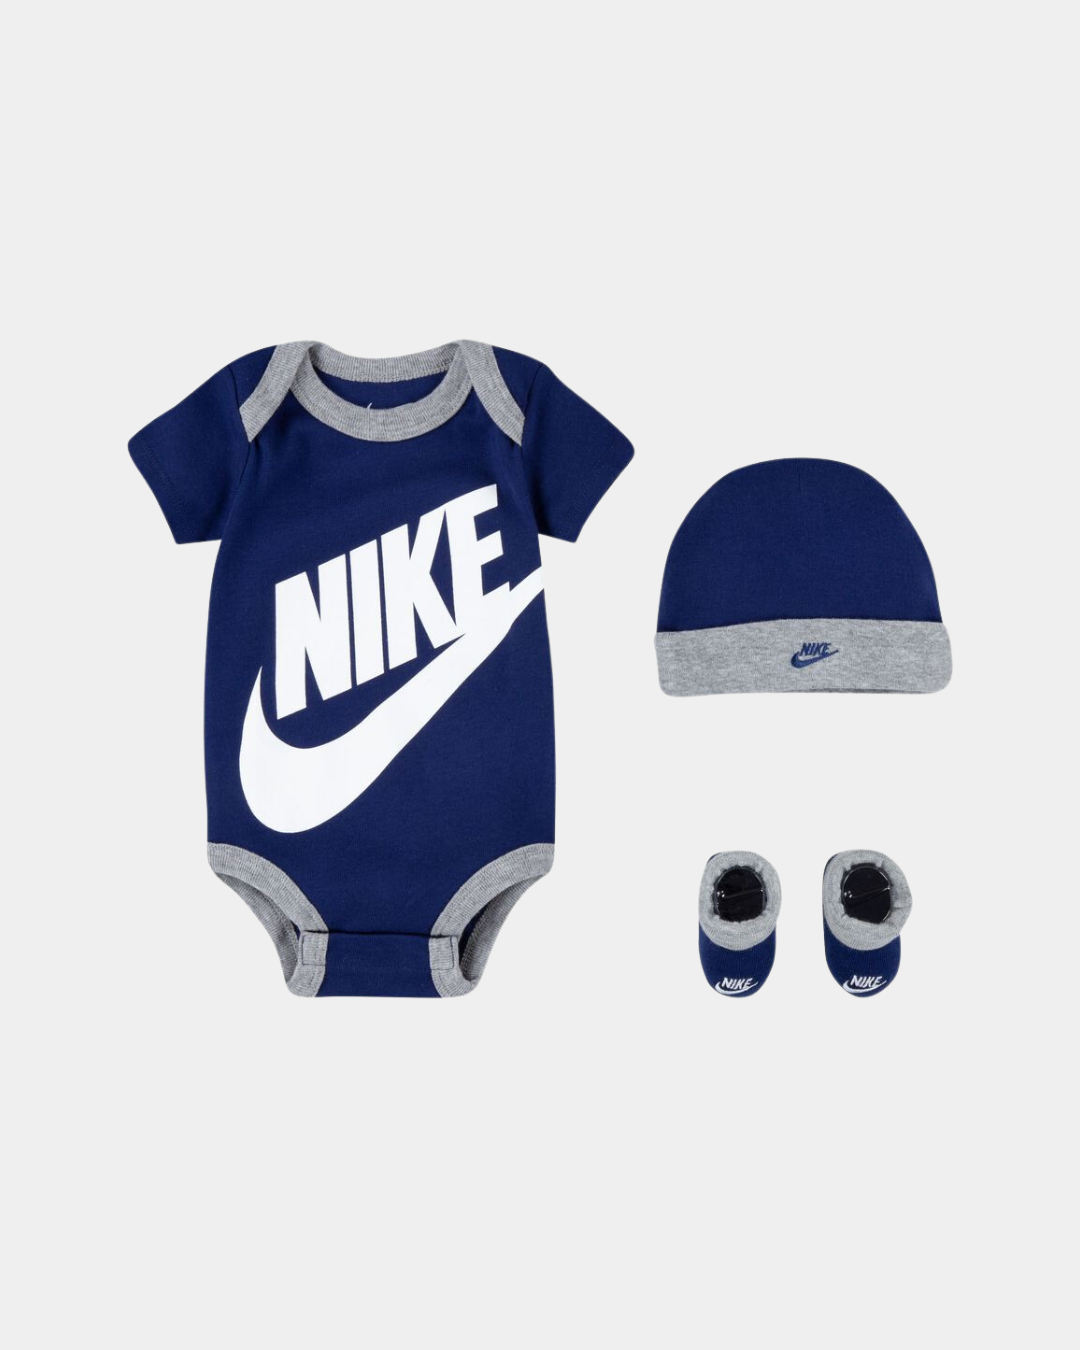 Completo Nike da bambino - Blu/Grigio/Bianco